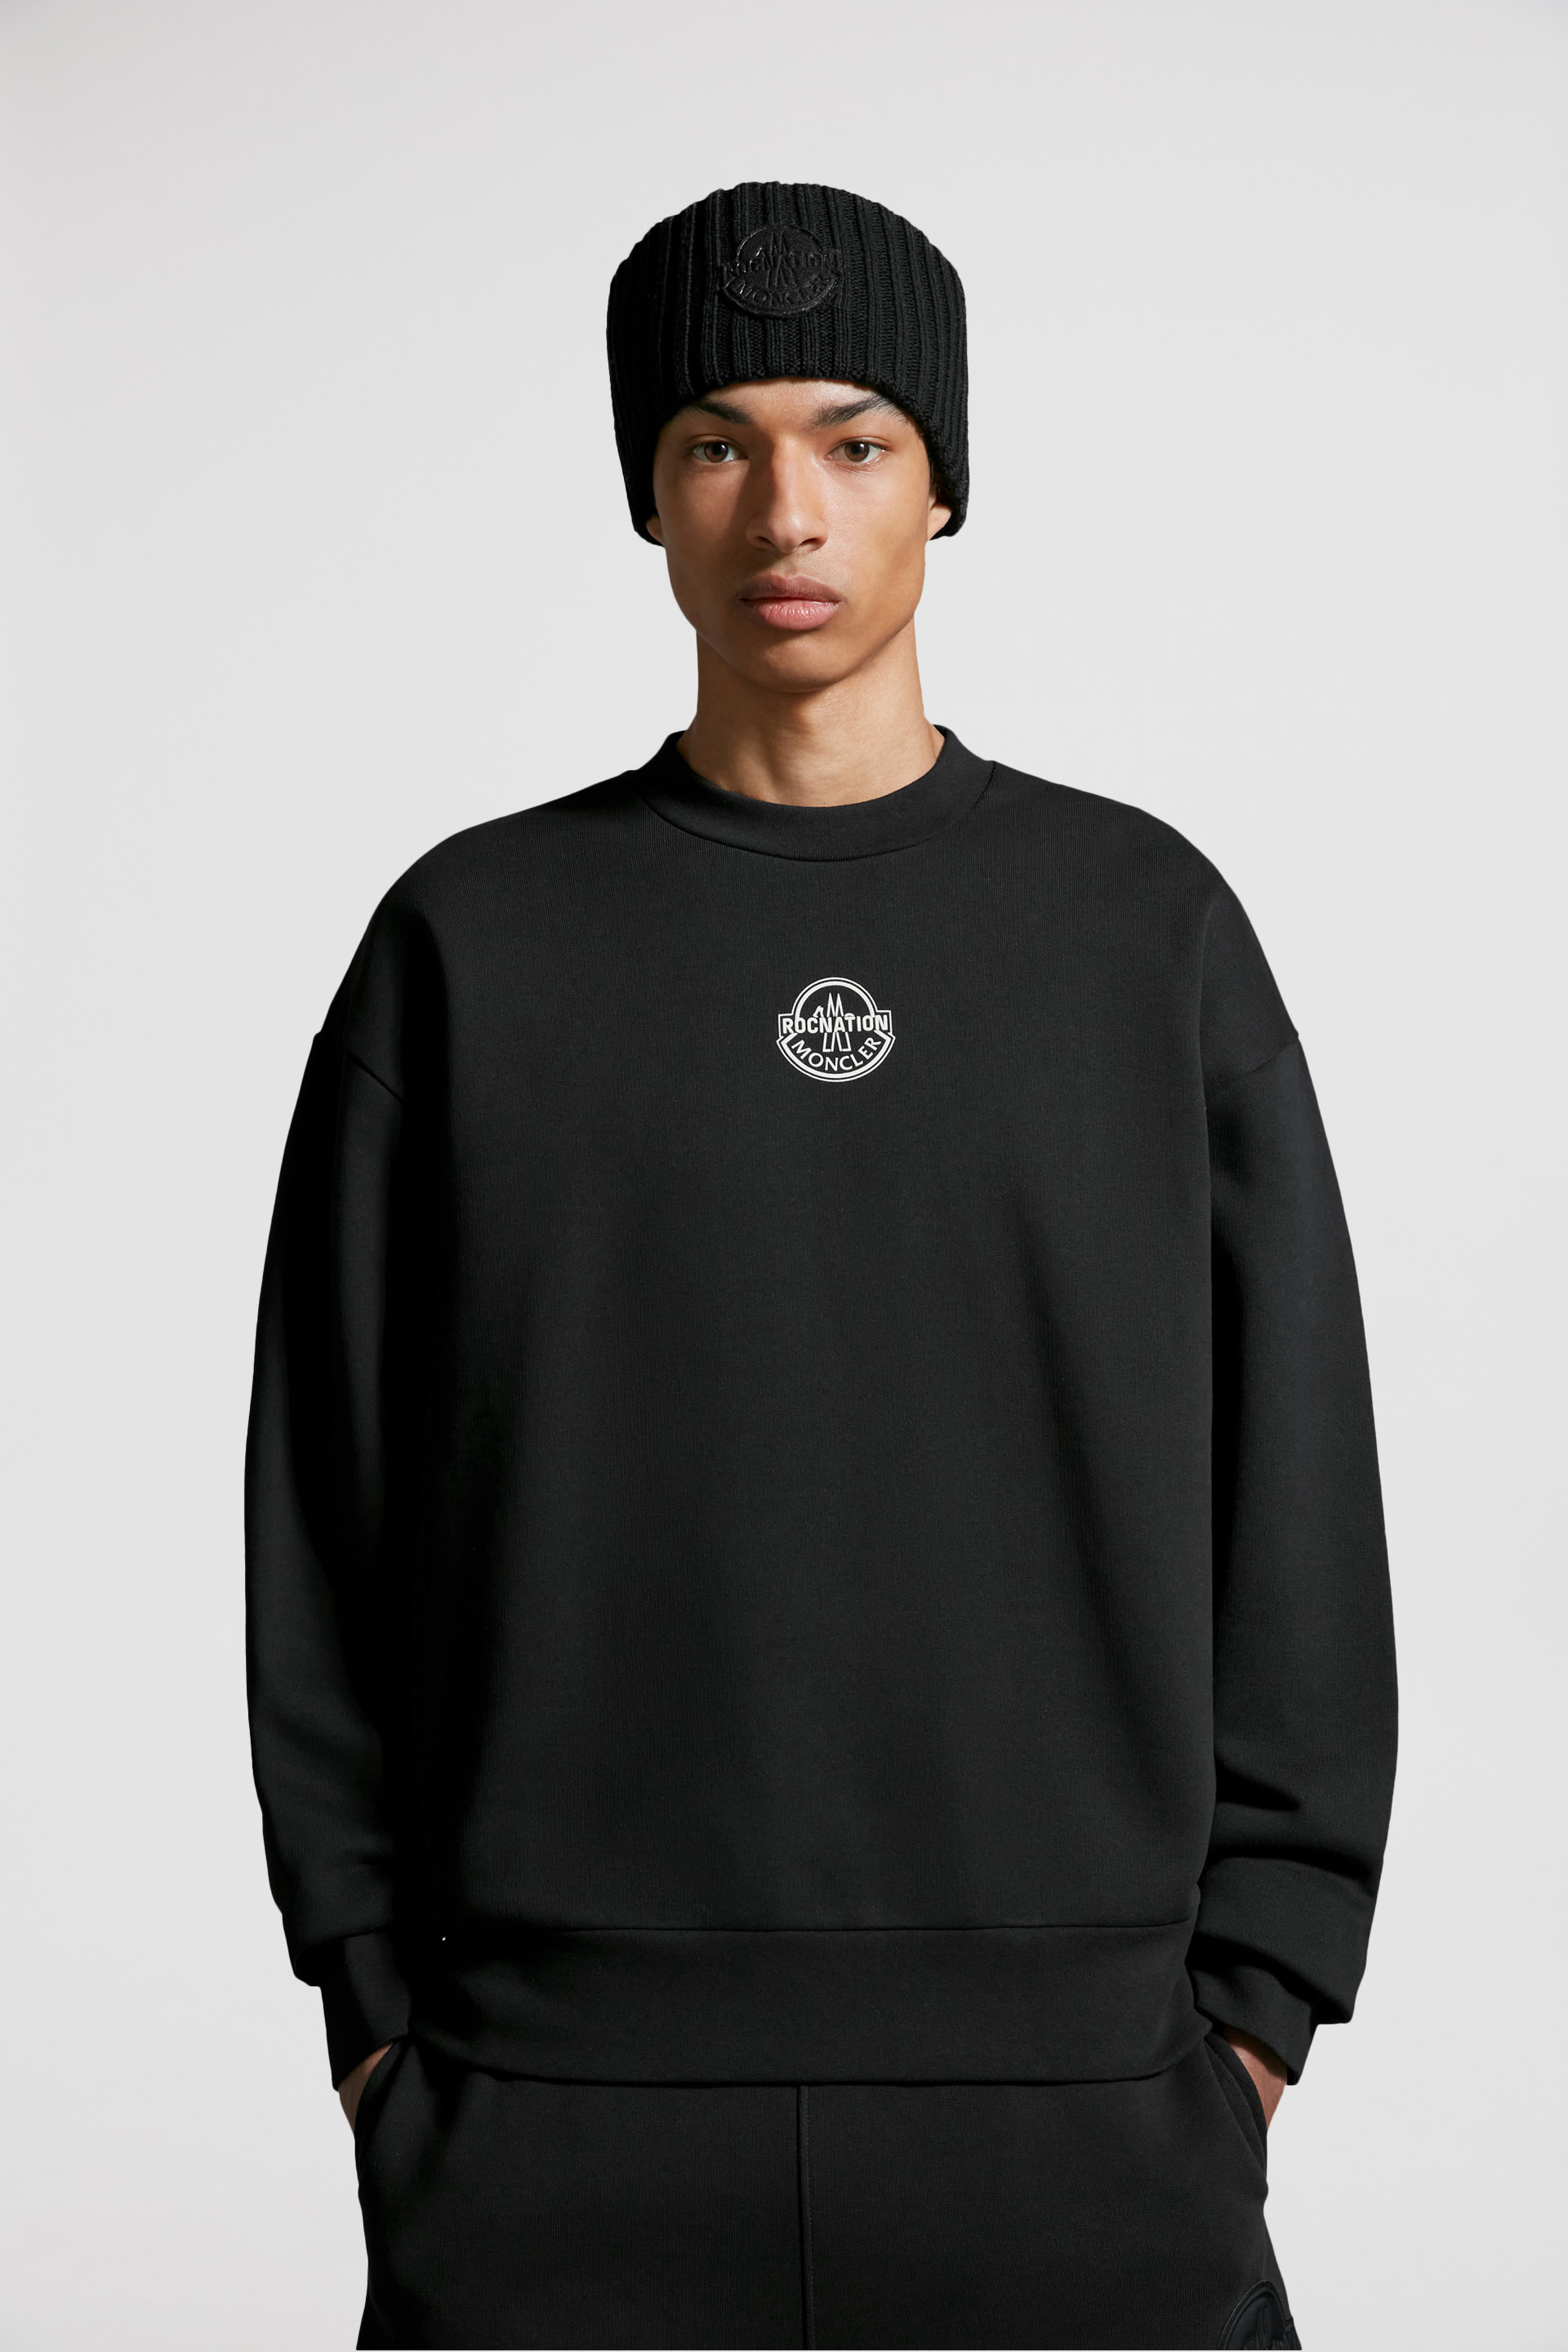 Black Logo Sweatshirt - Moncler x Roc Nation designed by Jay-Z for ...